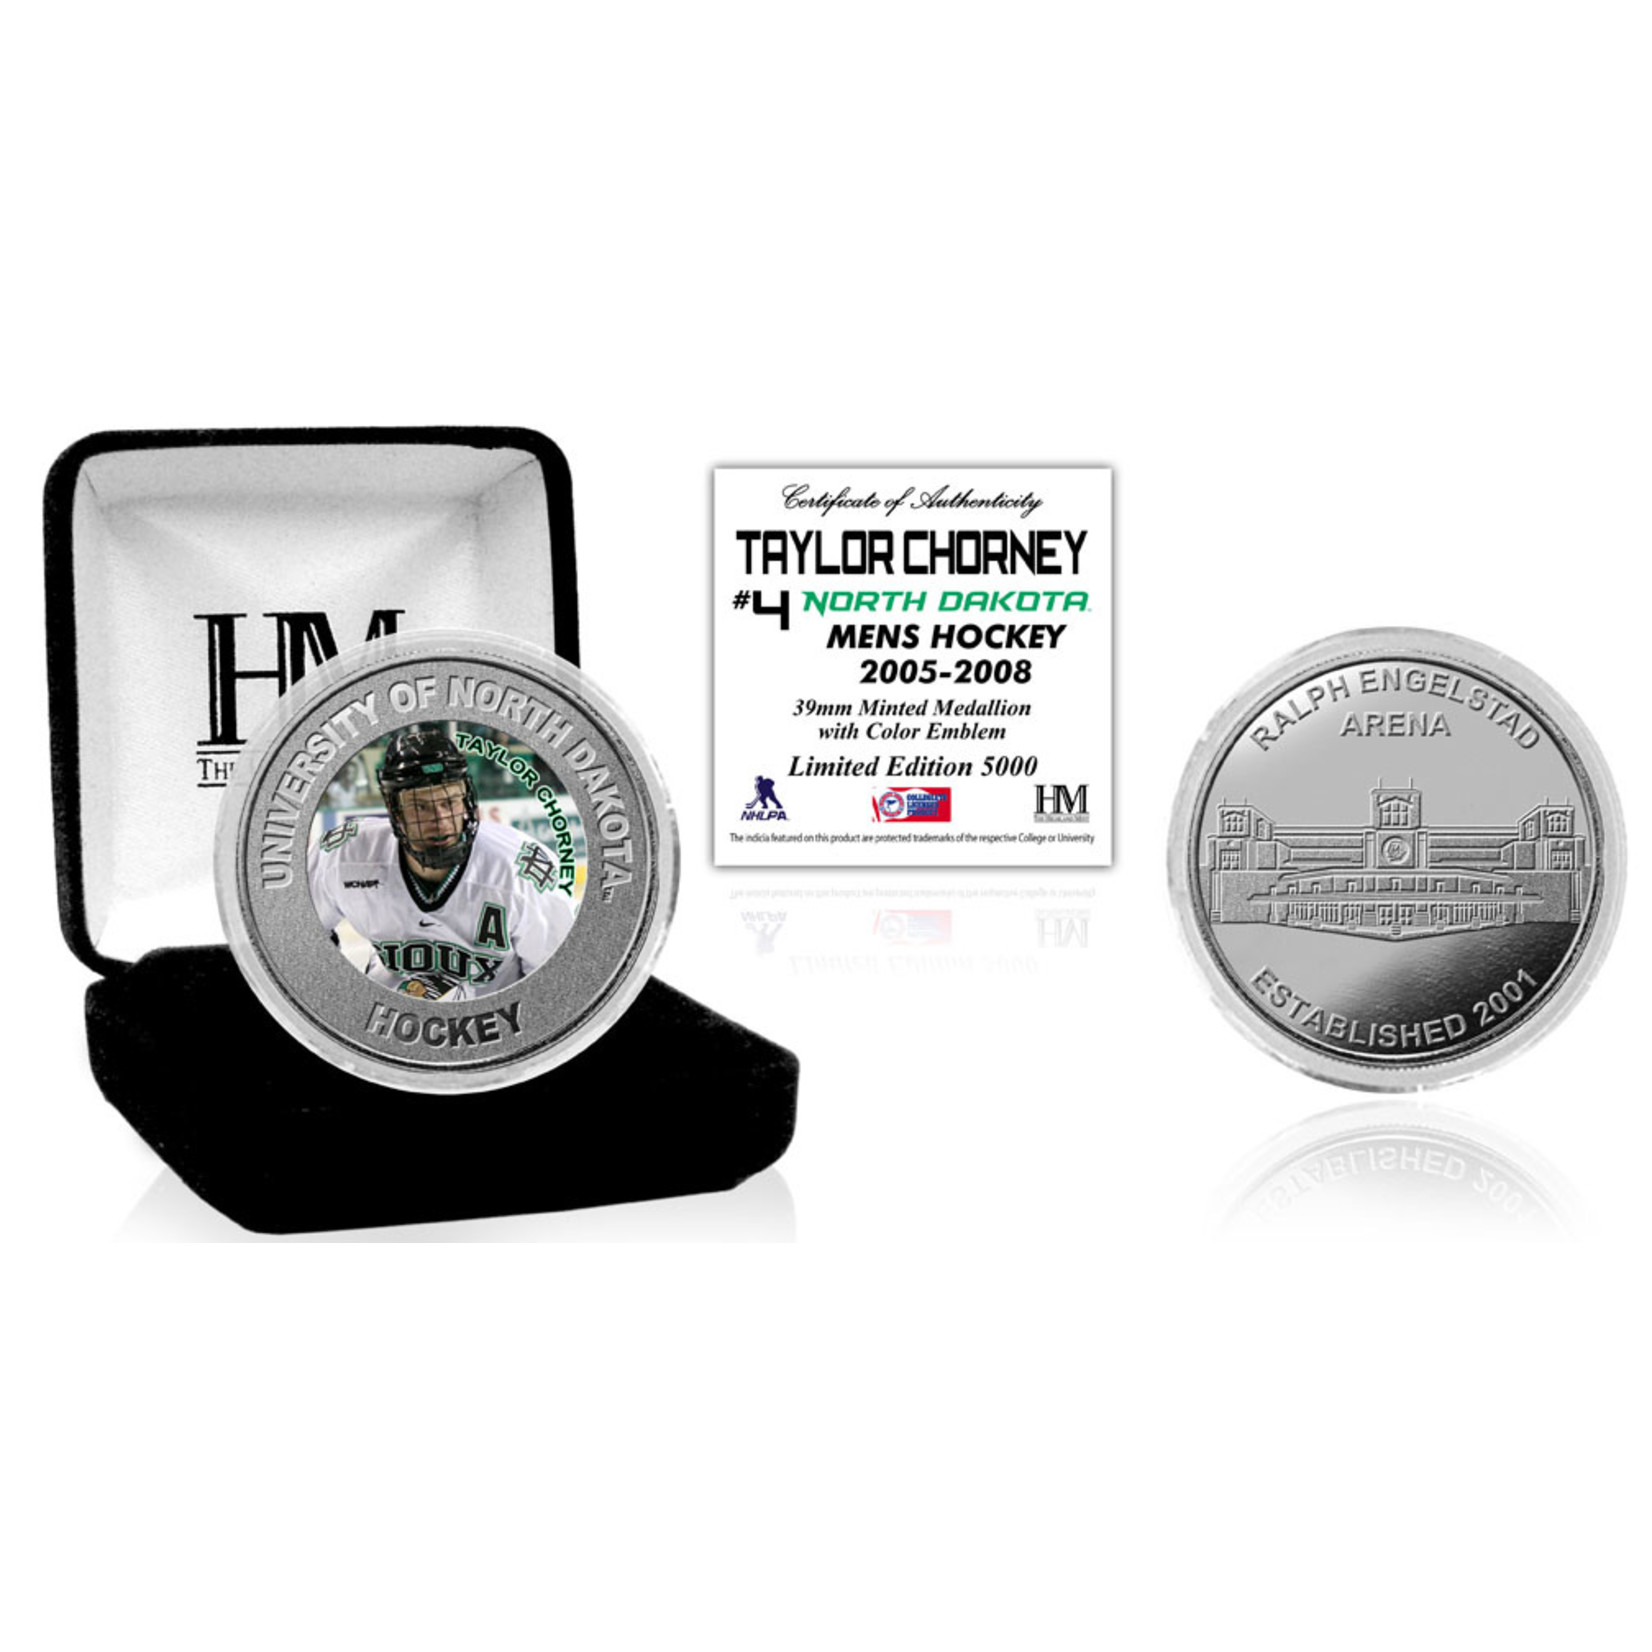 The Highland Mint UND Alumni Coin Taylor Chorney